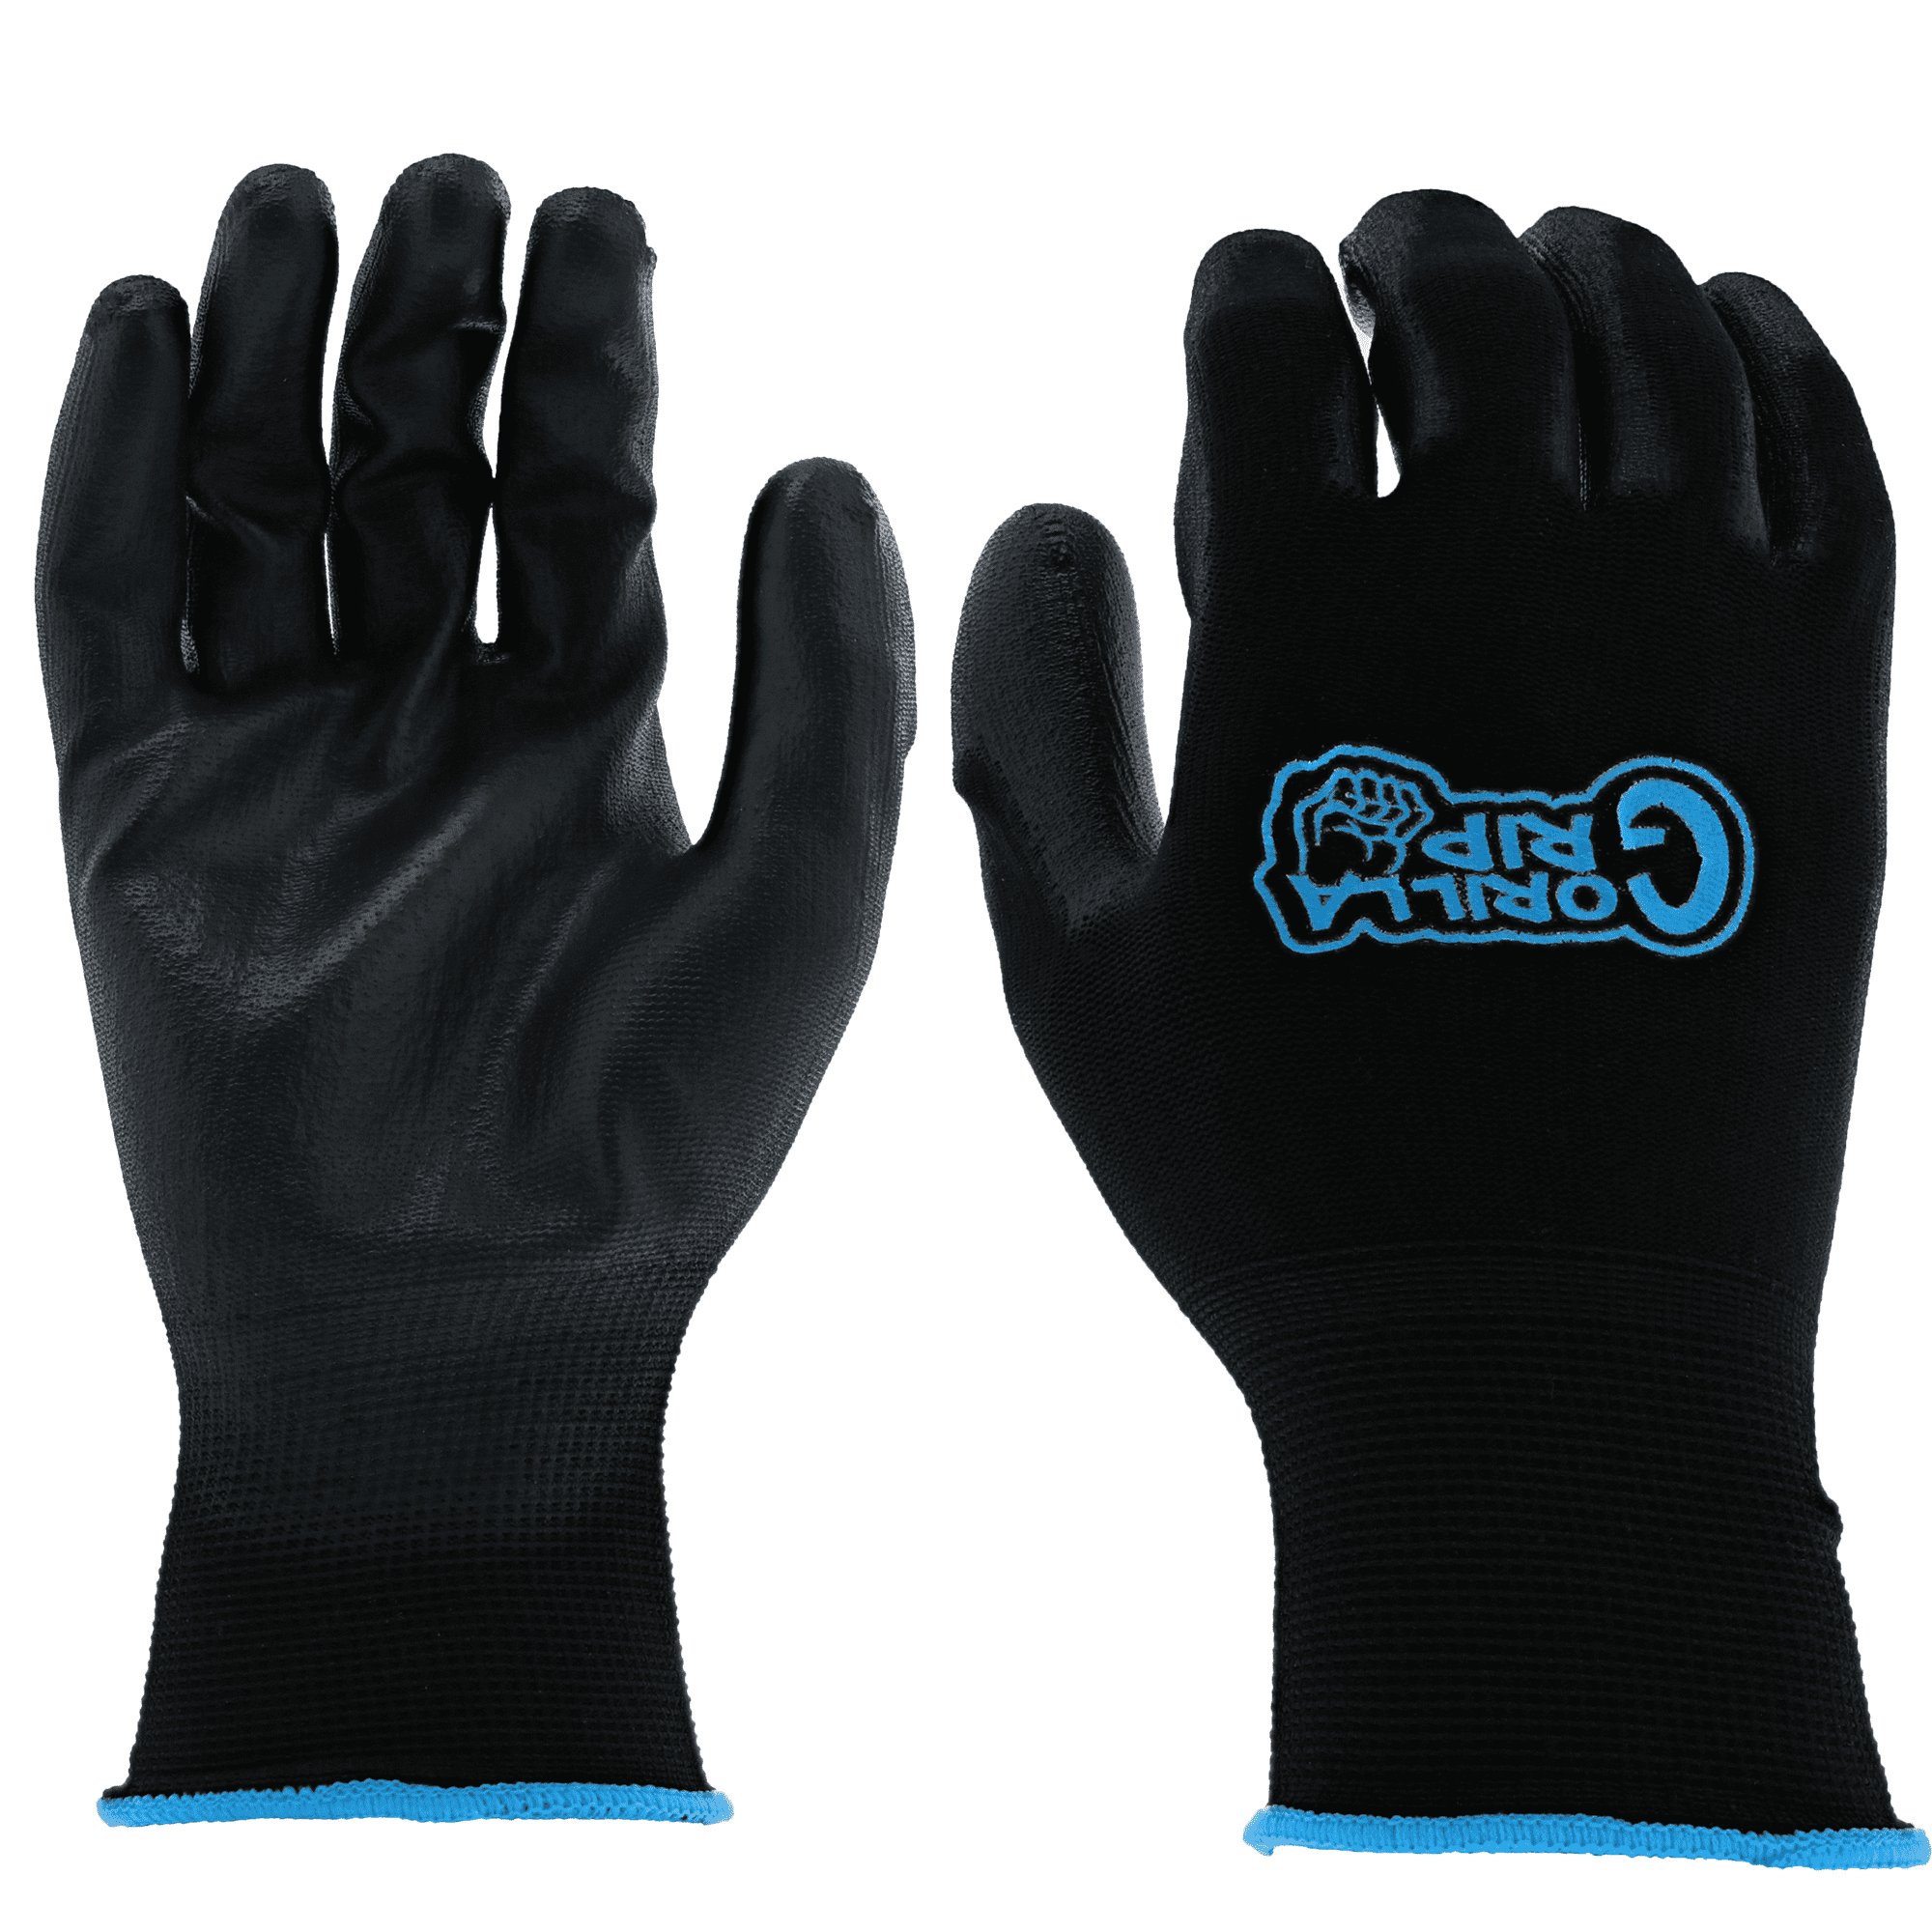 Gorilla Grip Slip Resistant All Purpose Work Gloves 5 Pack 